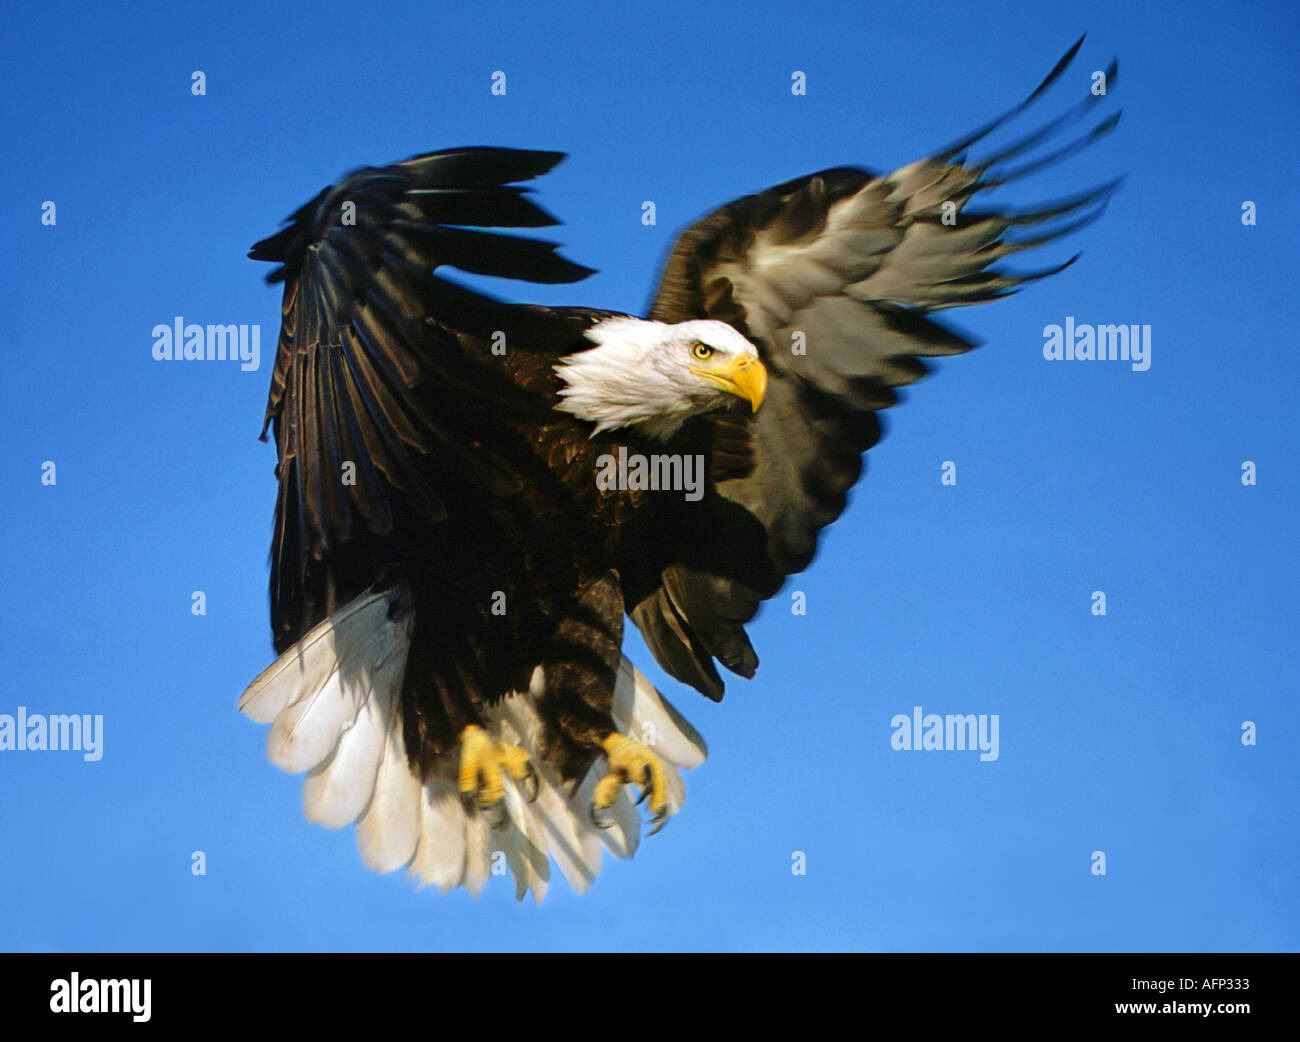 USA IDAHO American Bald Eagle in flight preparing to land in Birds of Prey area Stock Photo